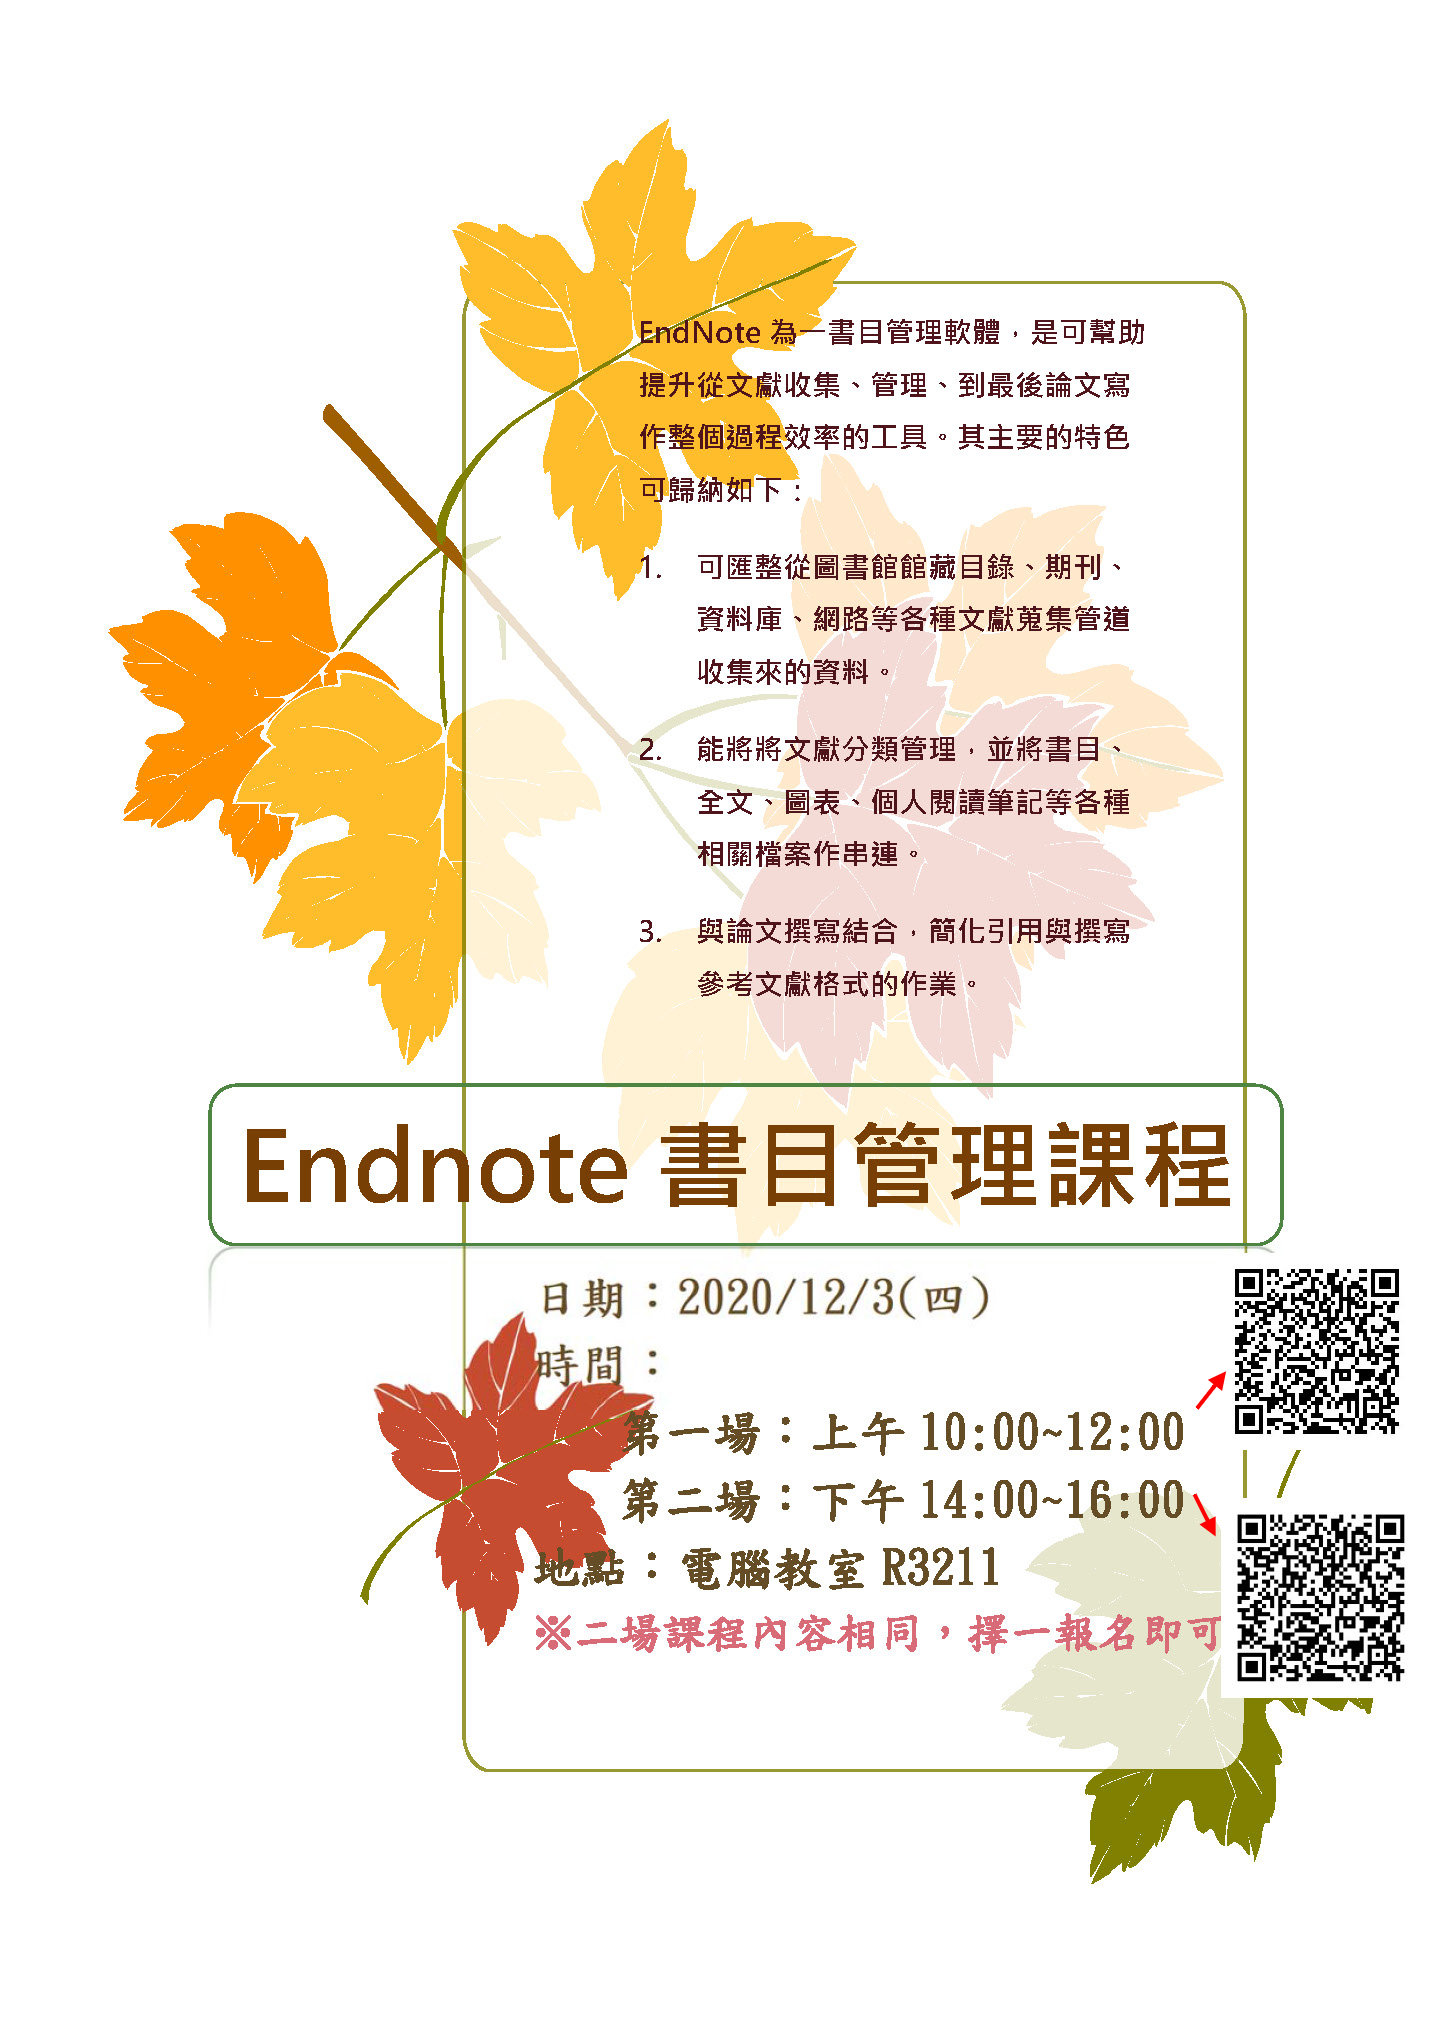 20201110 endnote